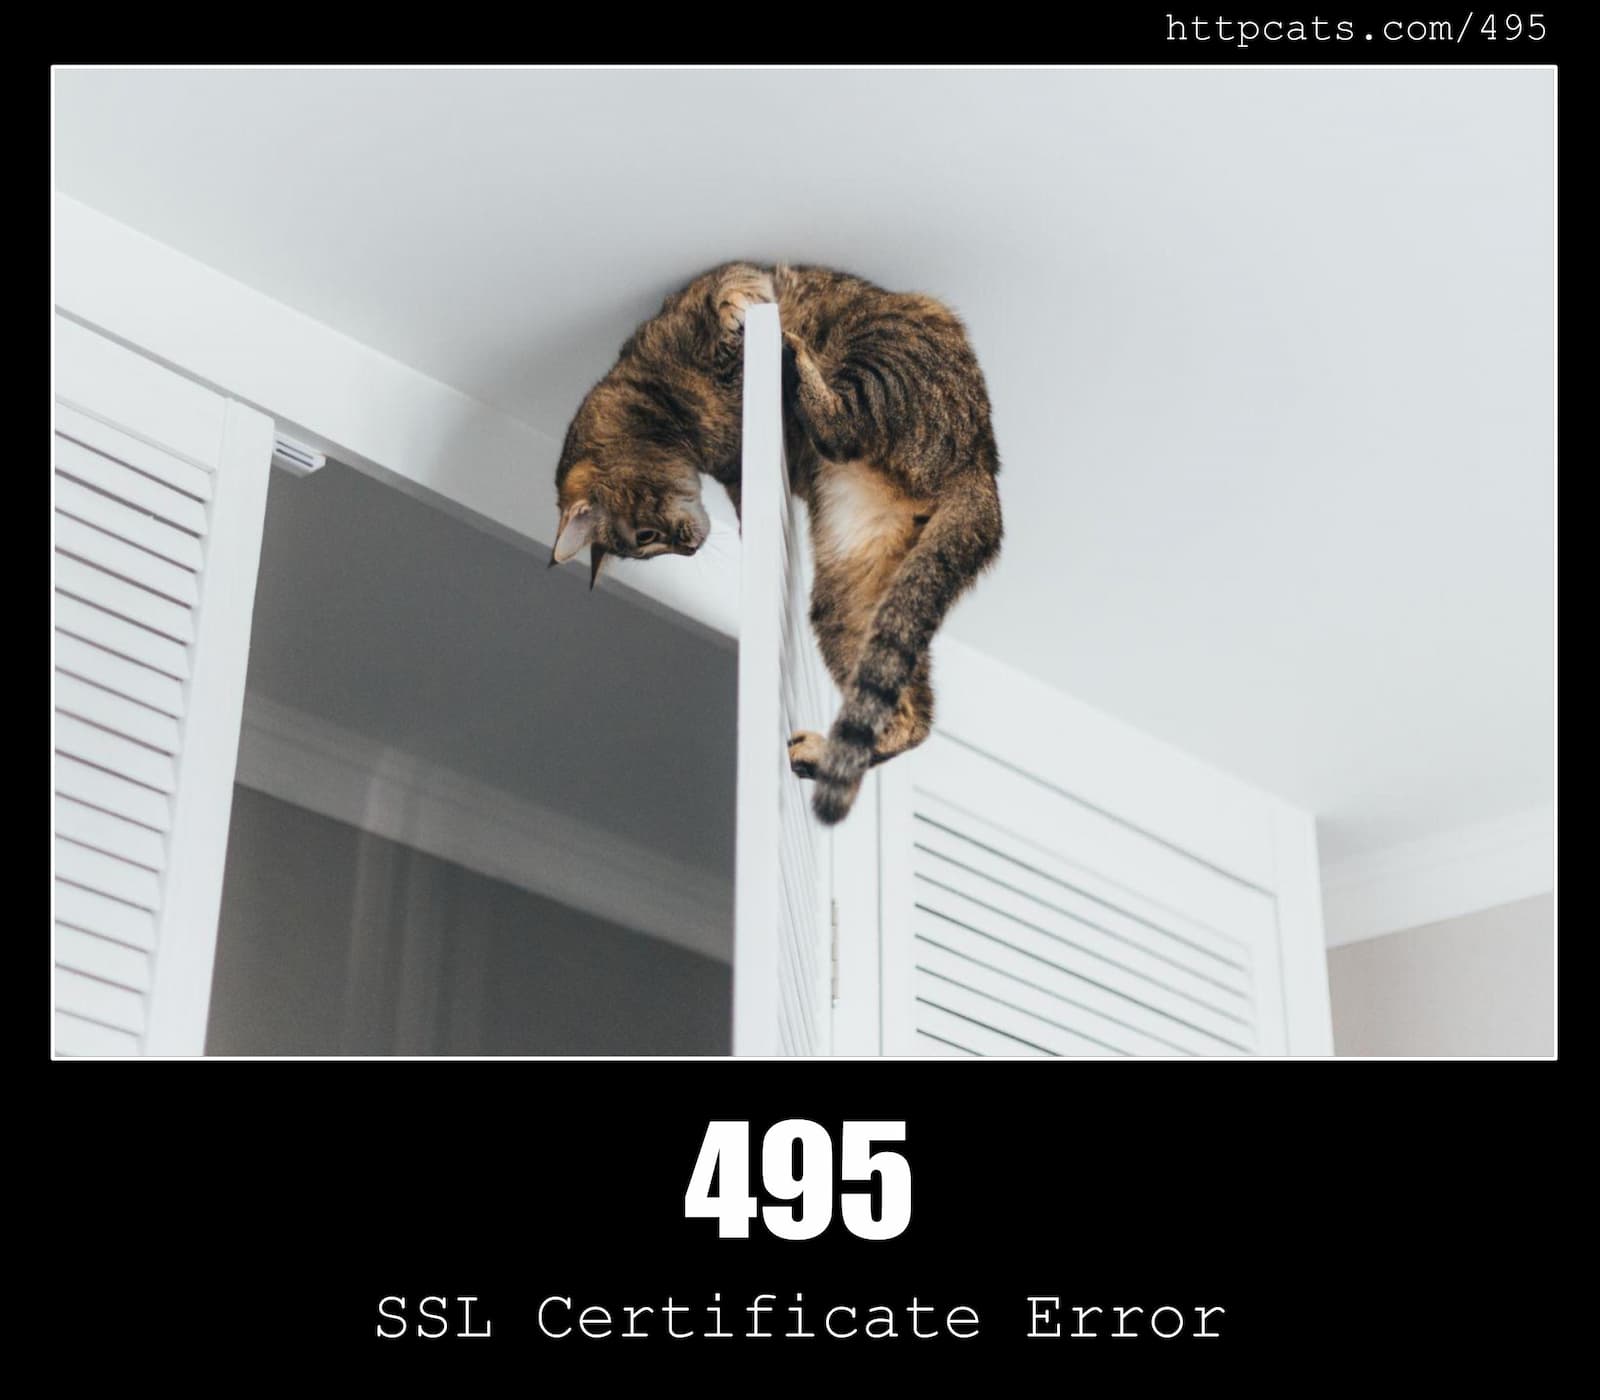 HTTP Status Code 495 SSL Certificate Error & Cats